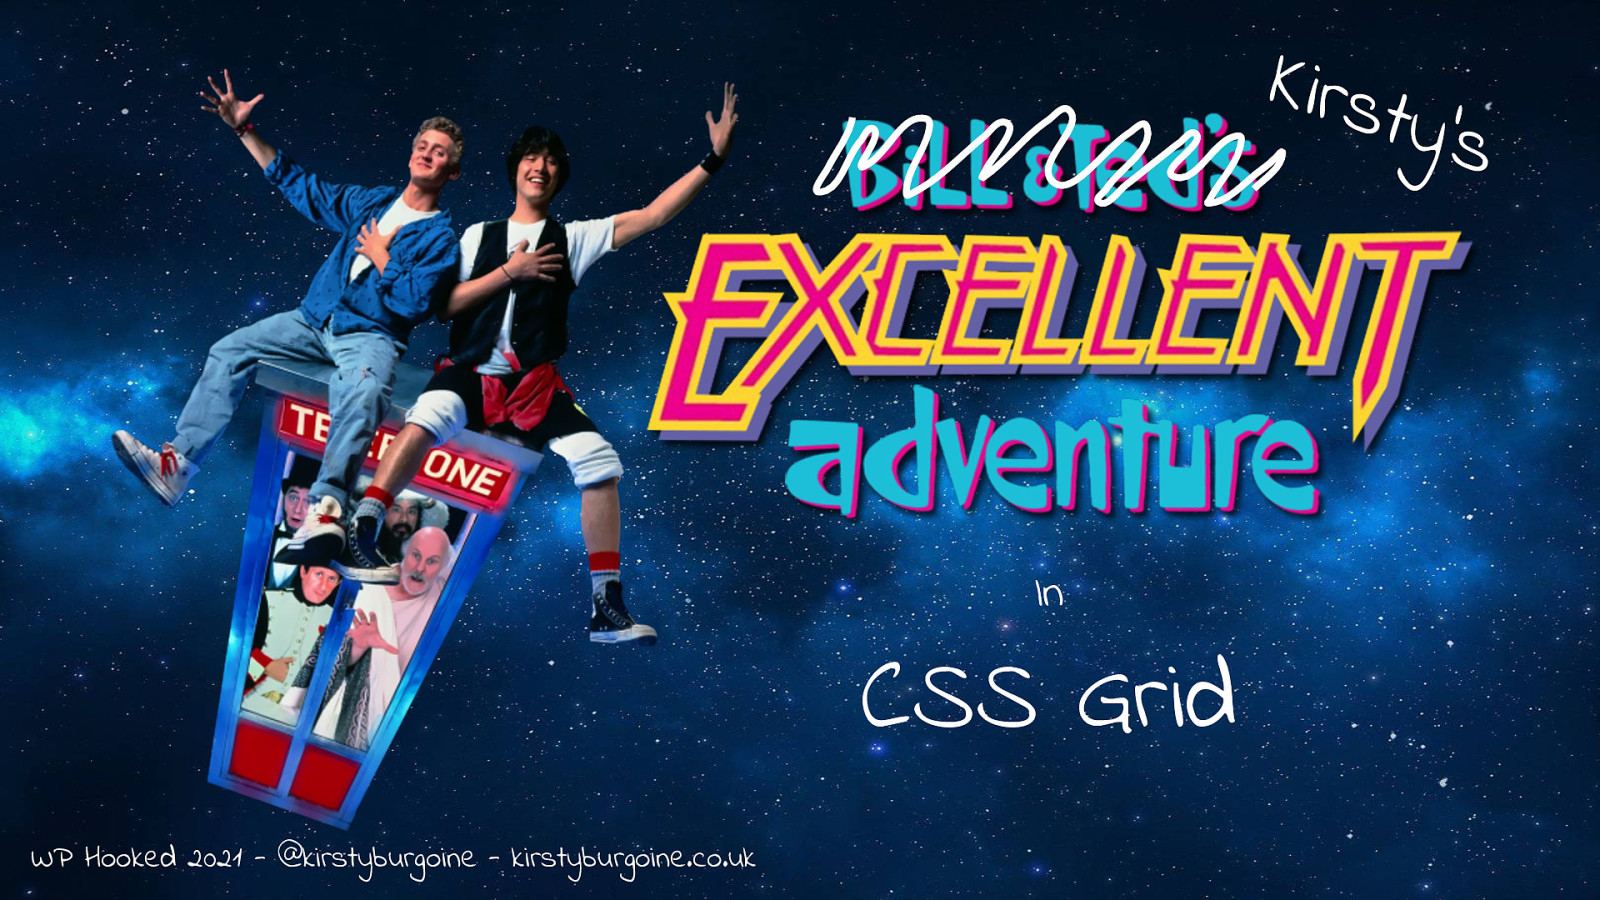 CSS GRID a most excellent adventure!